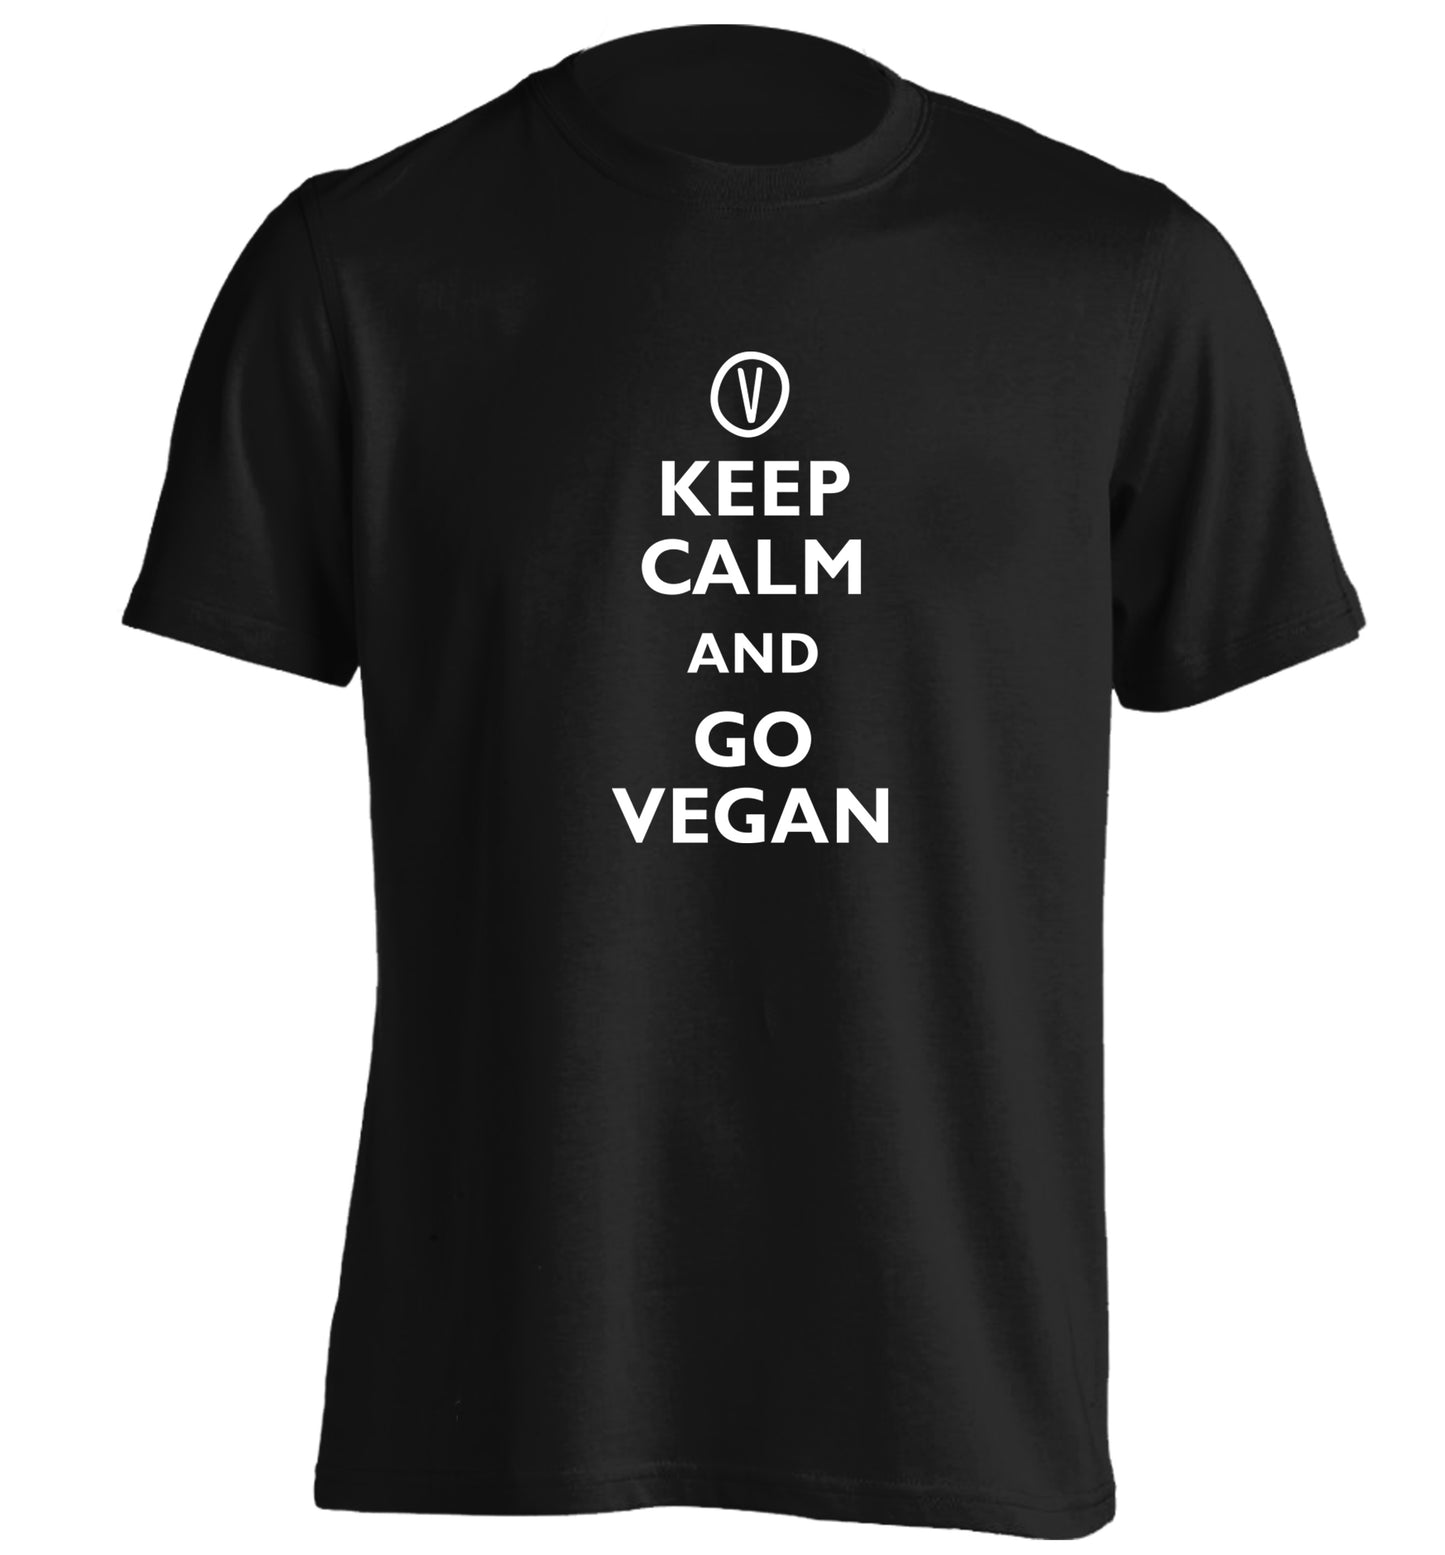 Keep calm and go vegan adults unisex black Tshirt 2XL